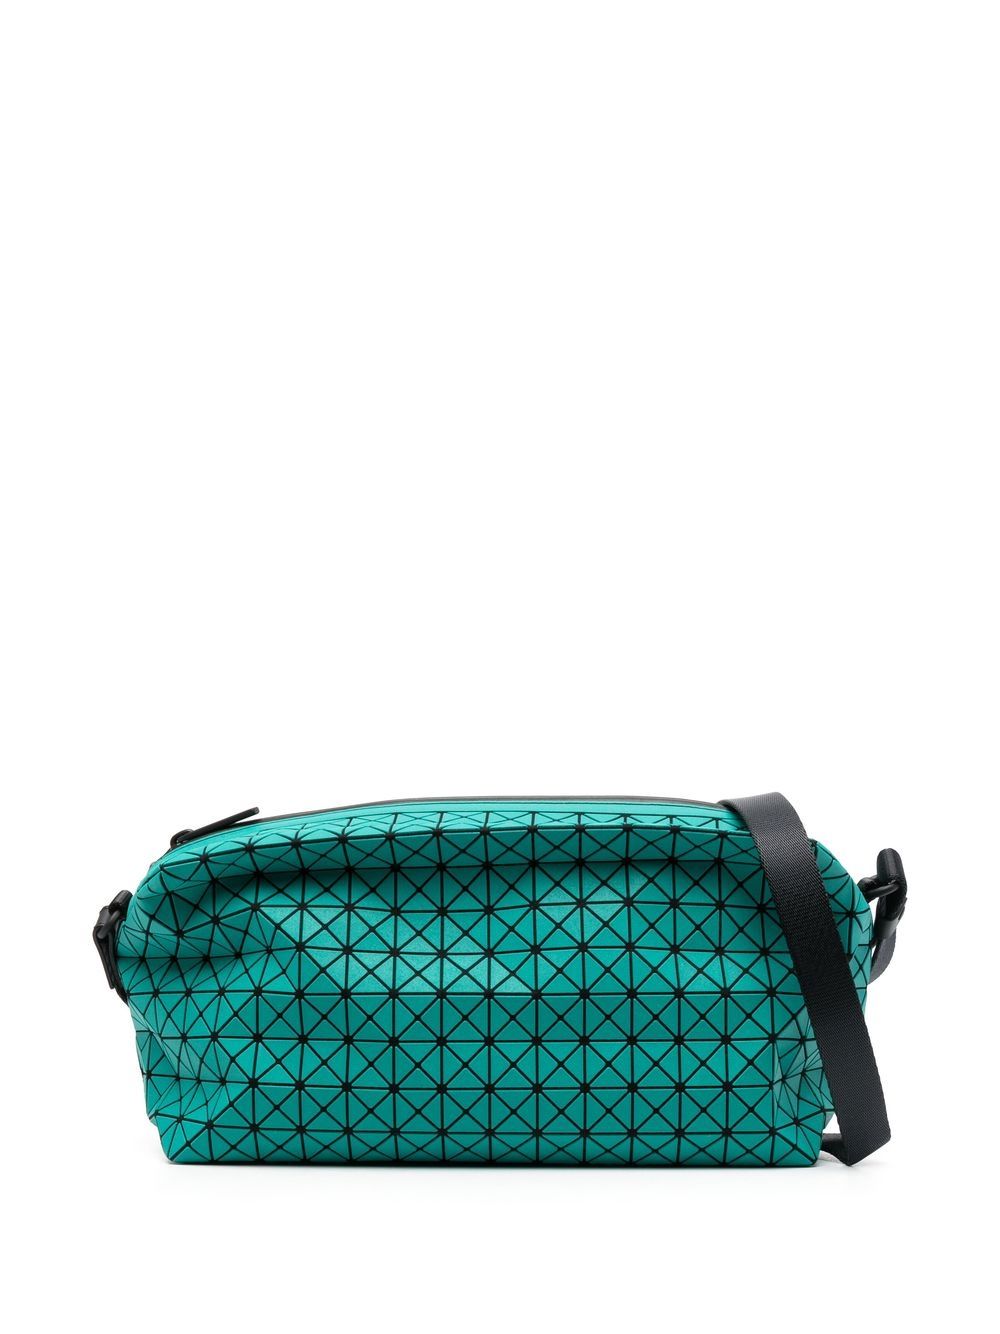 Bao Bao Issey Miyake Green Saddle Bag | ModeSens